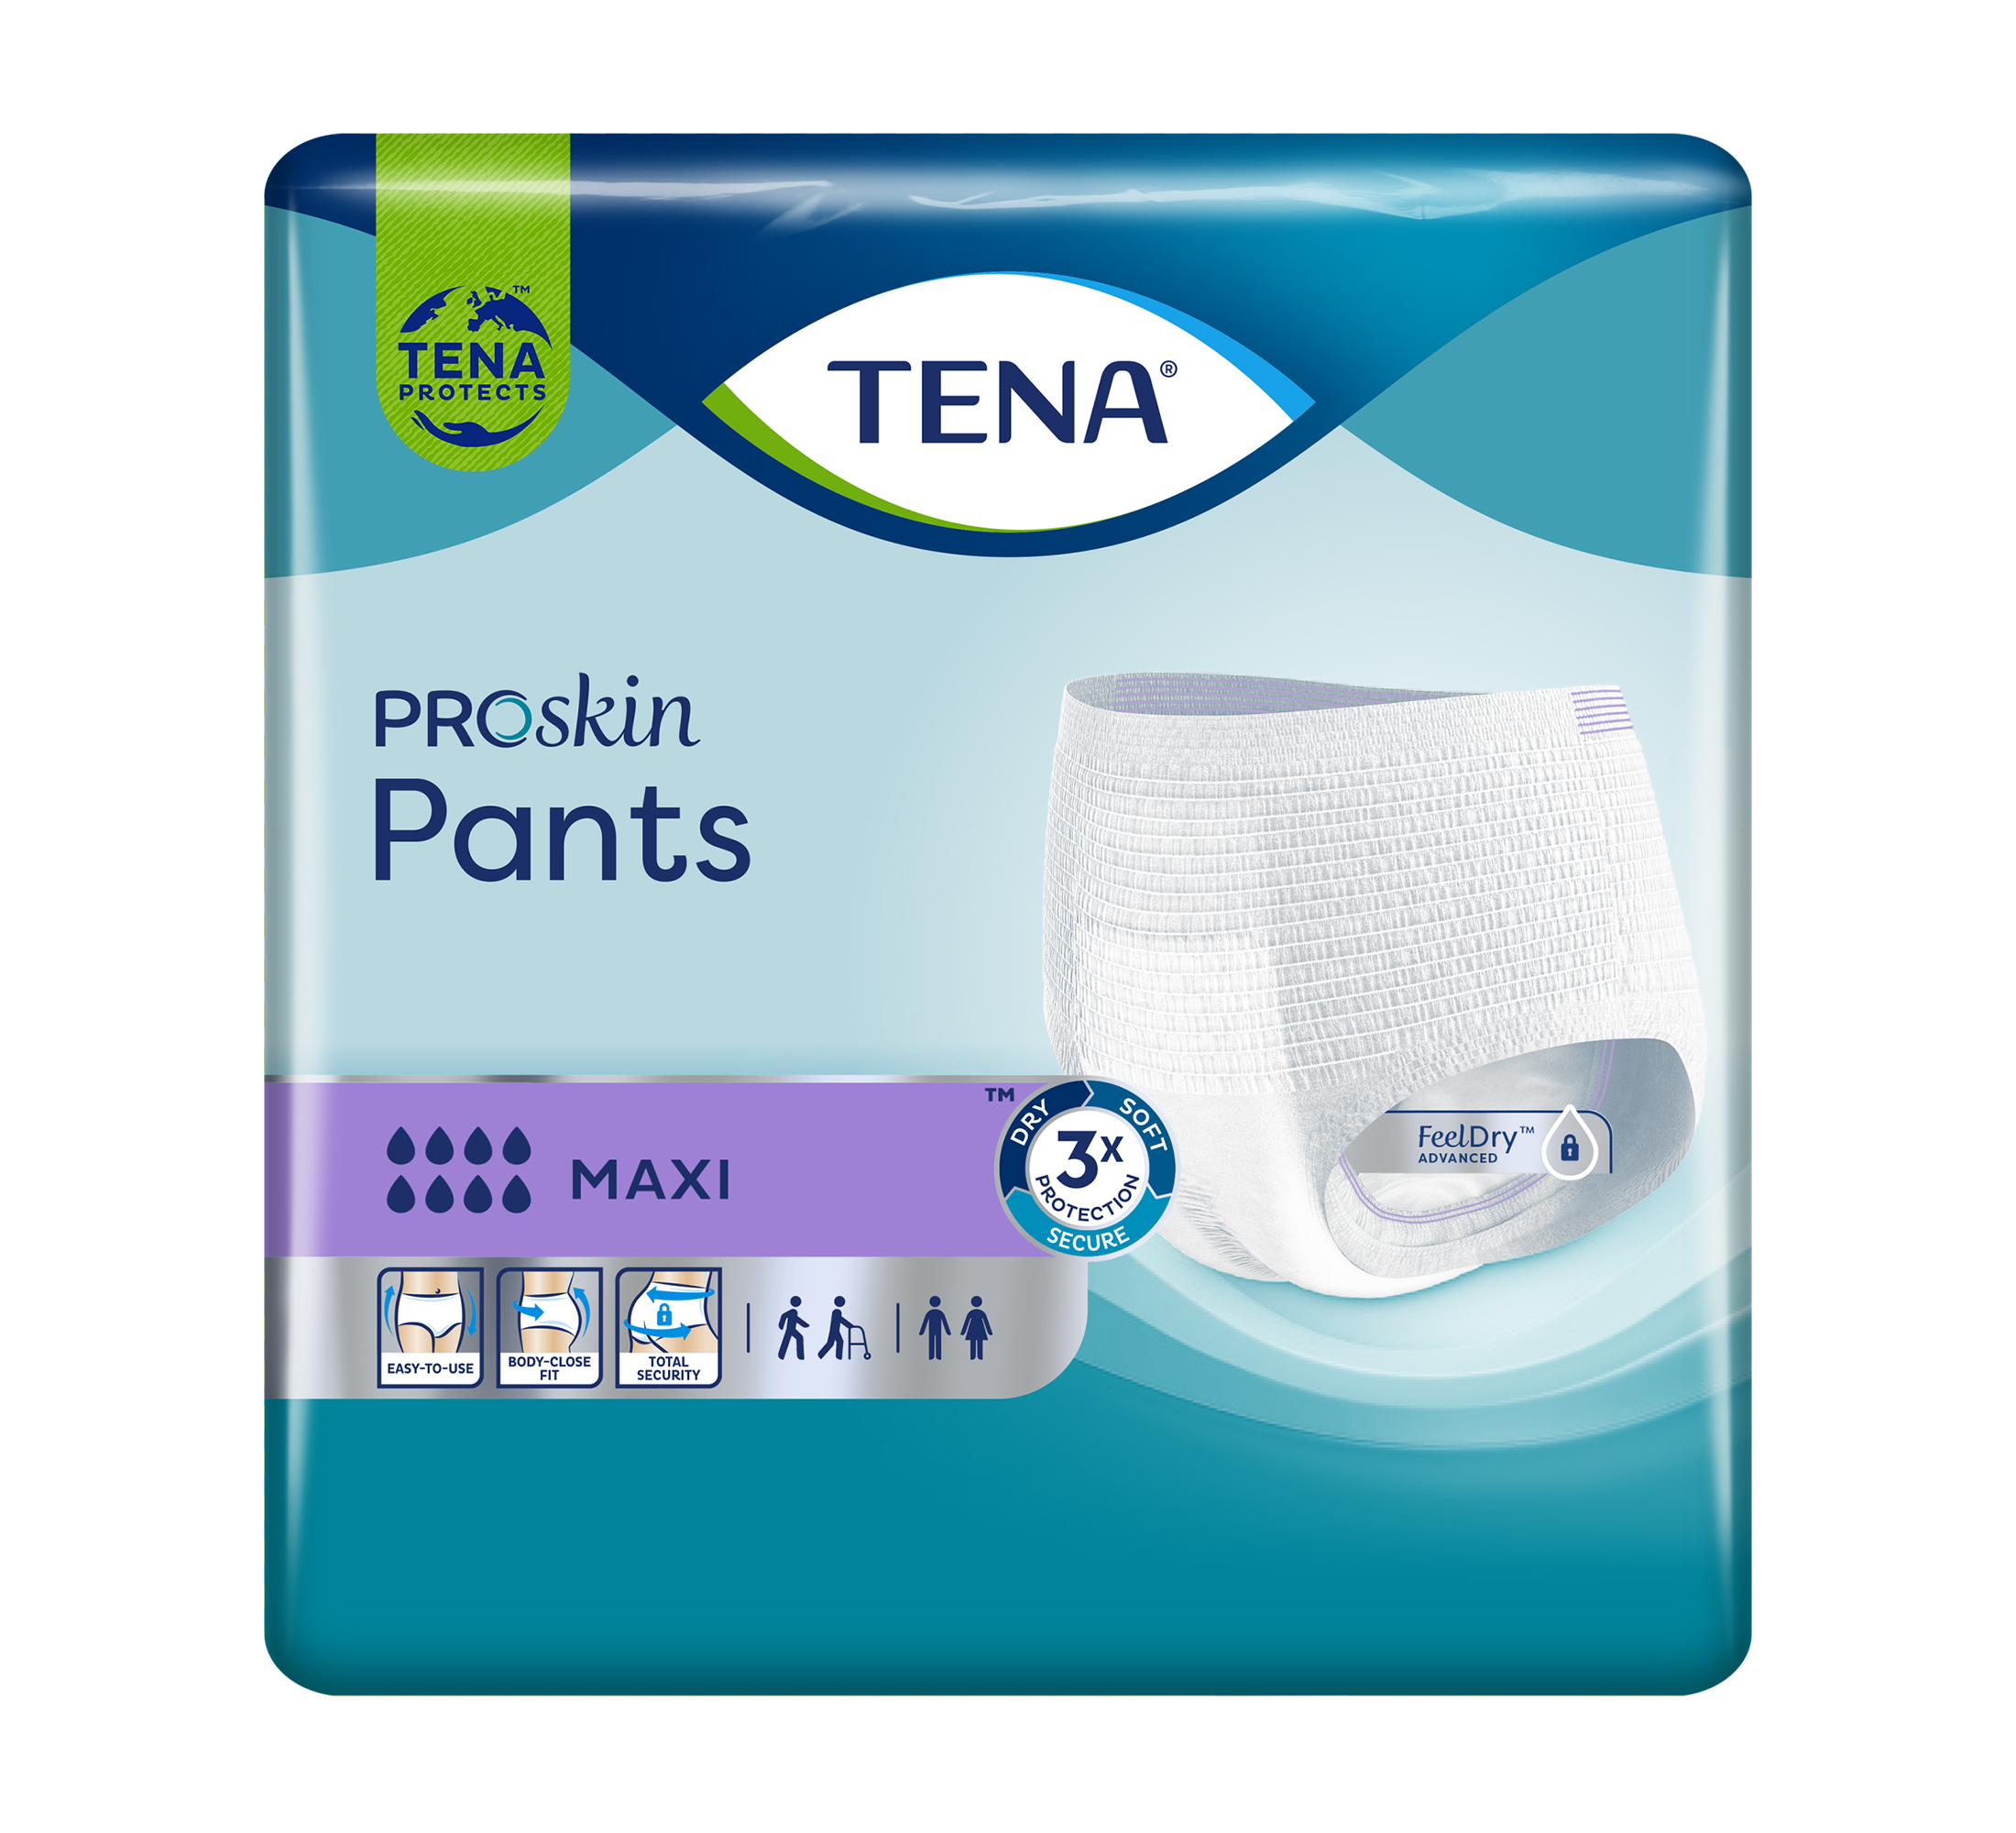 TENA ProSkin Pants Maxi Einweghosen, Saugfähigkeit 8/8, Größe S, 10 Stk.